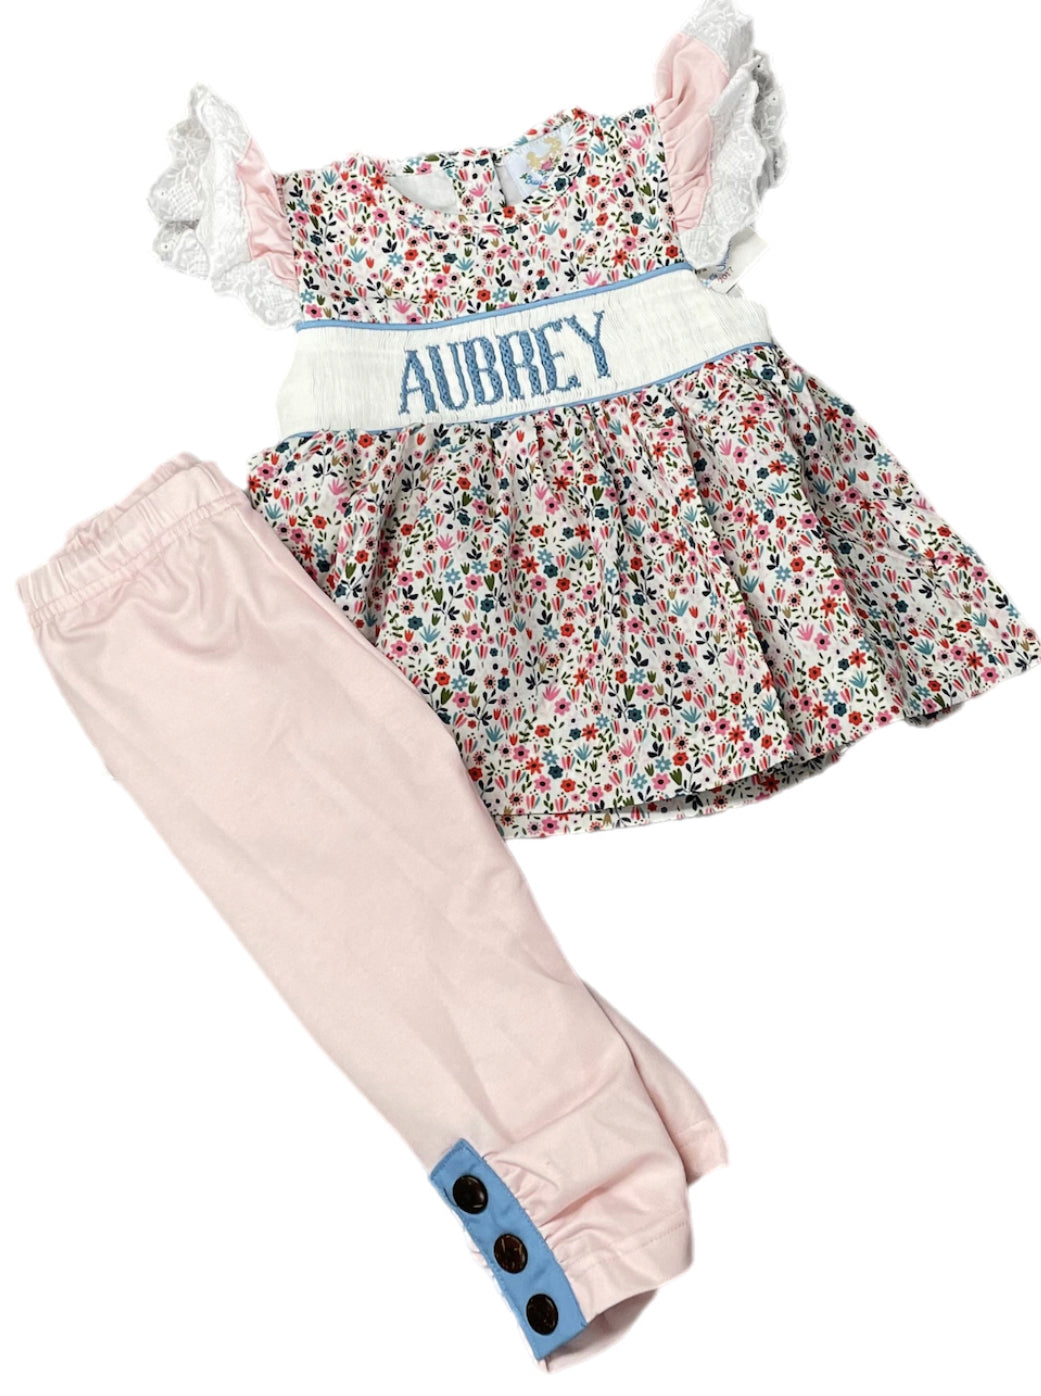 RTS: Girls Addison Floral Name Legging Set “Aubrey”